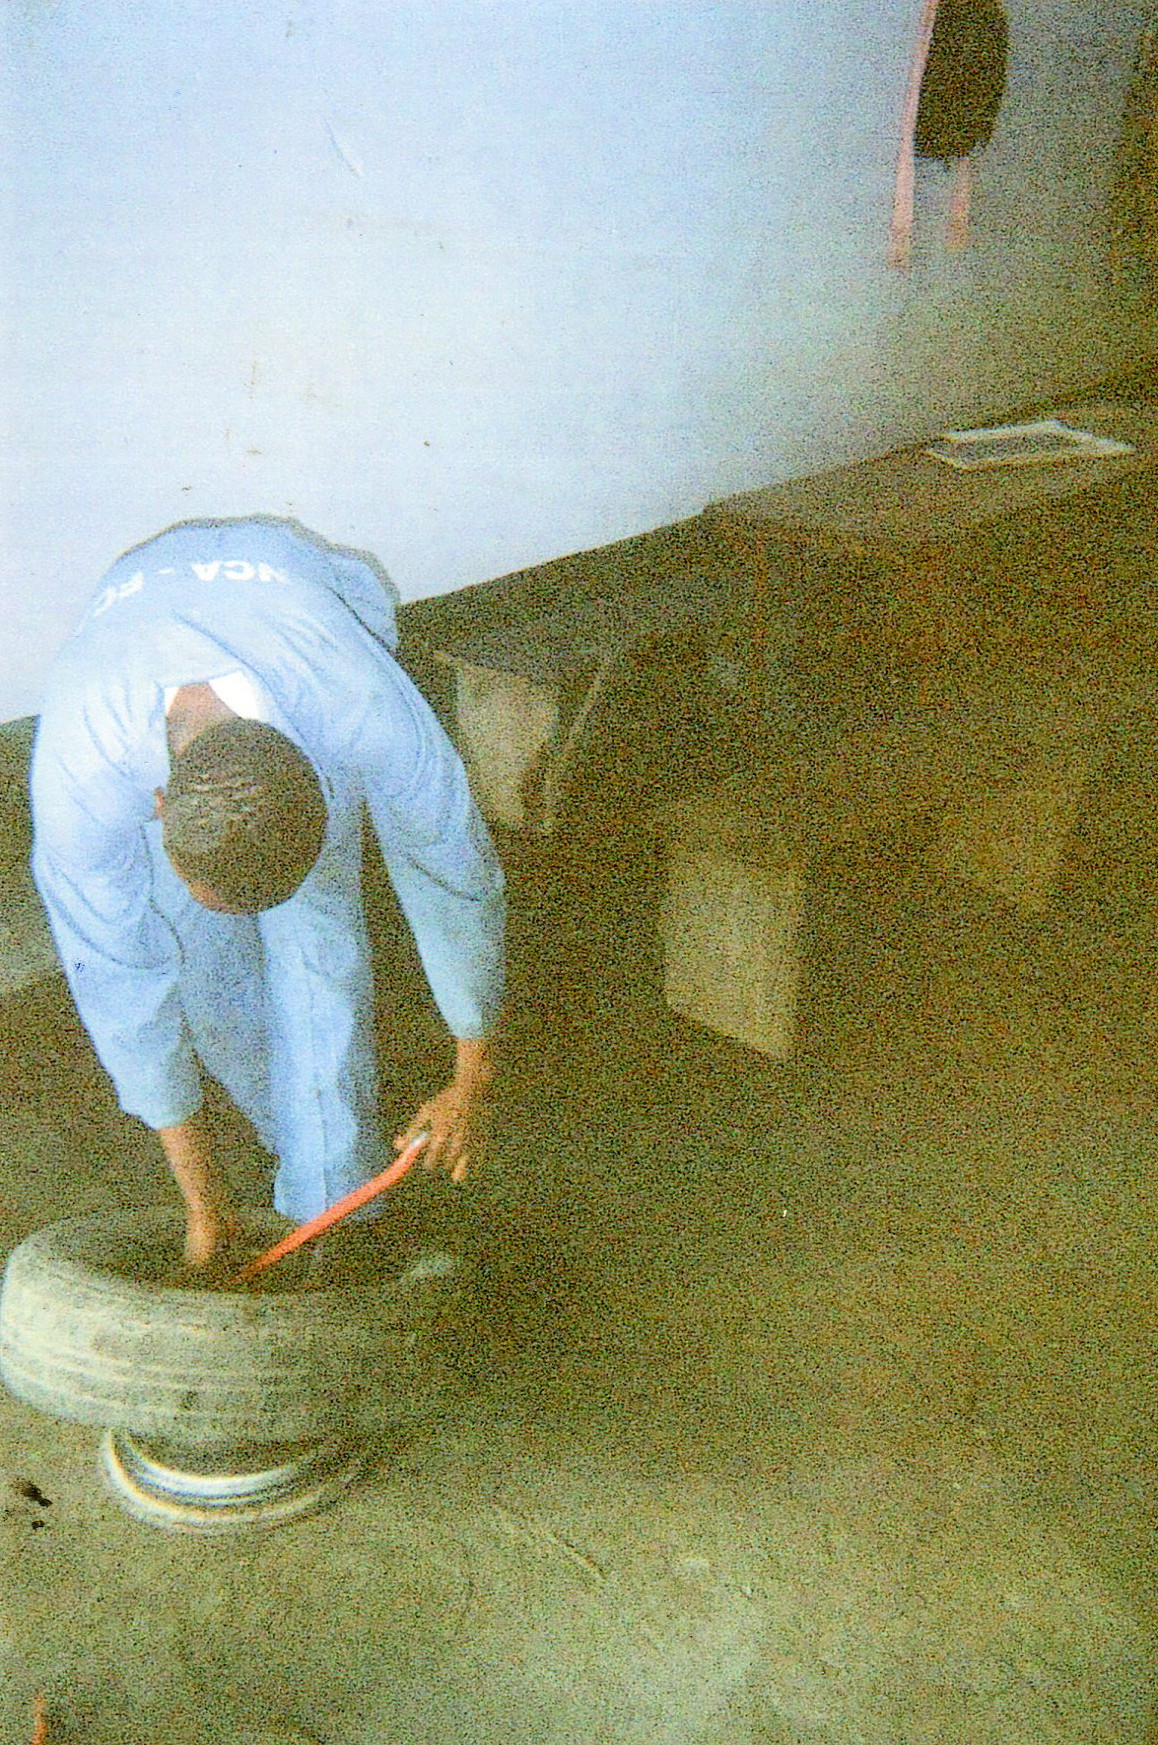  I am repairing a car tire.   